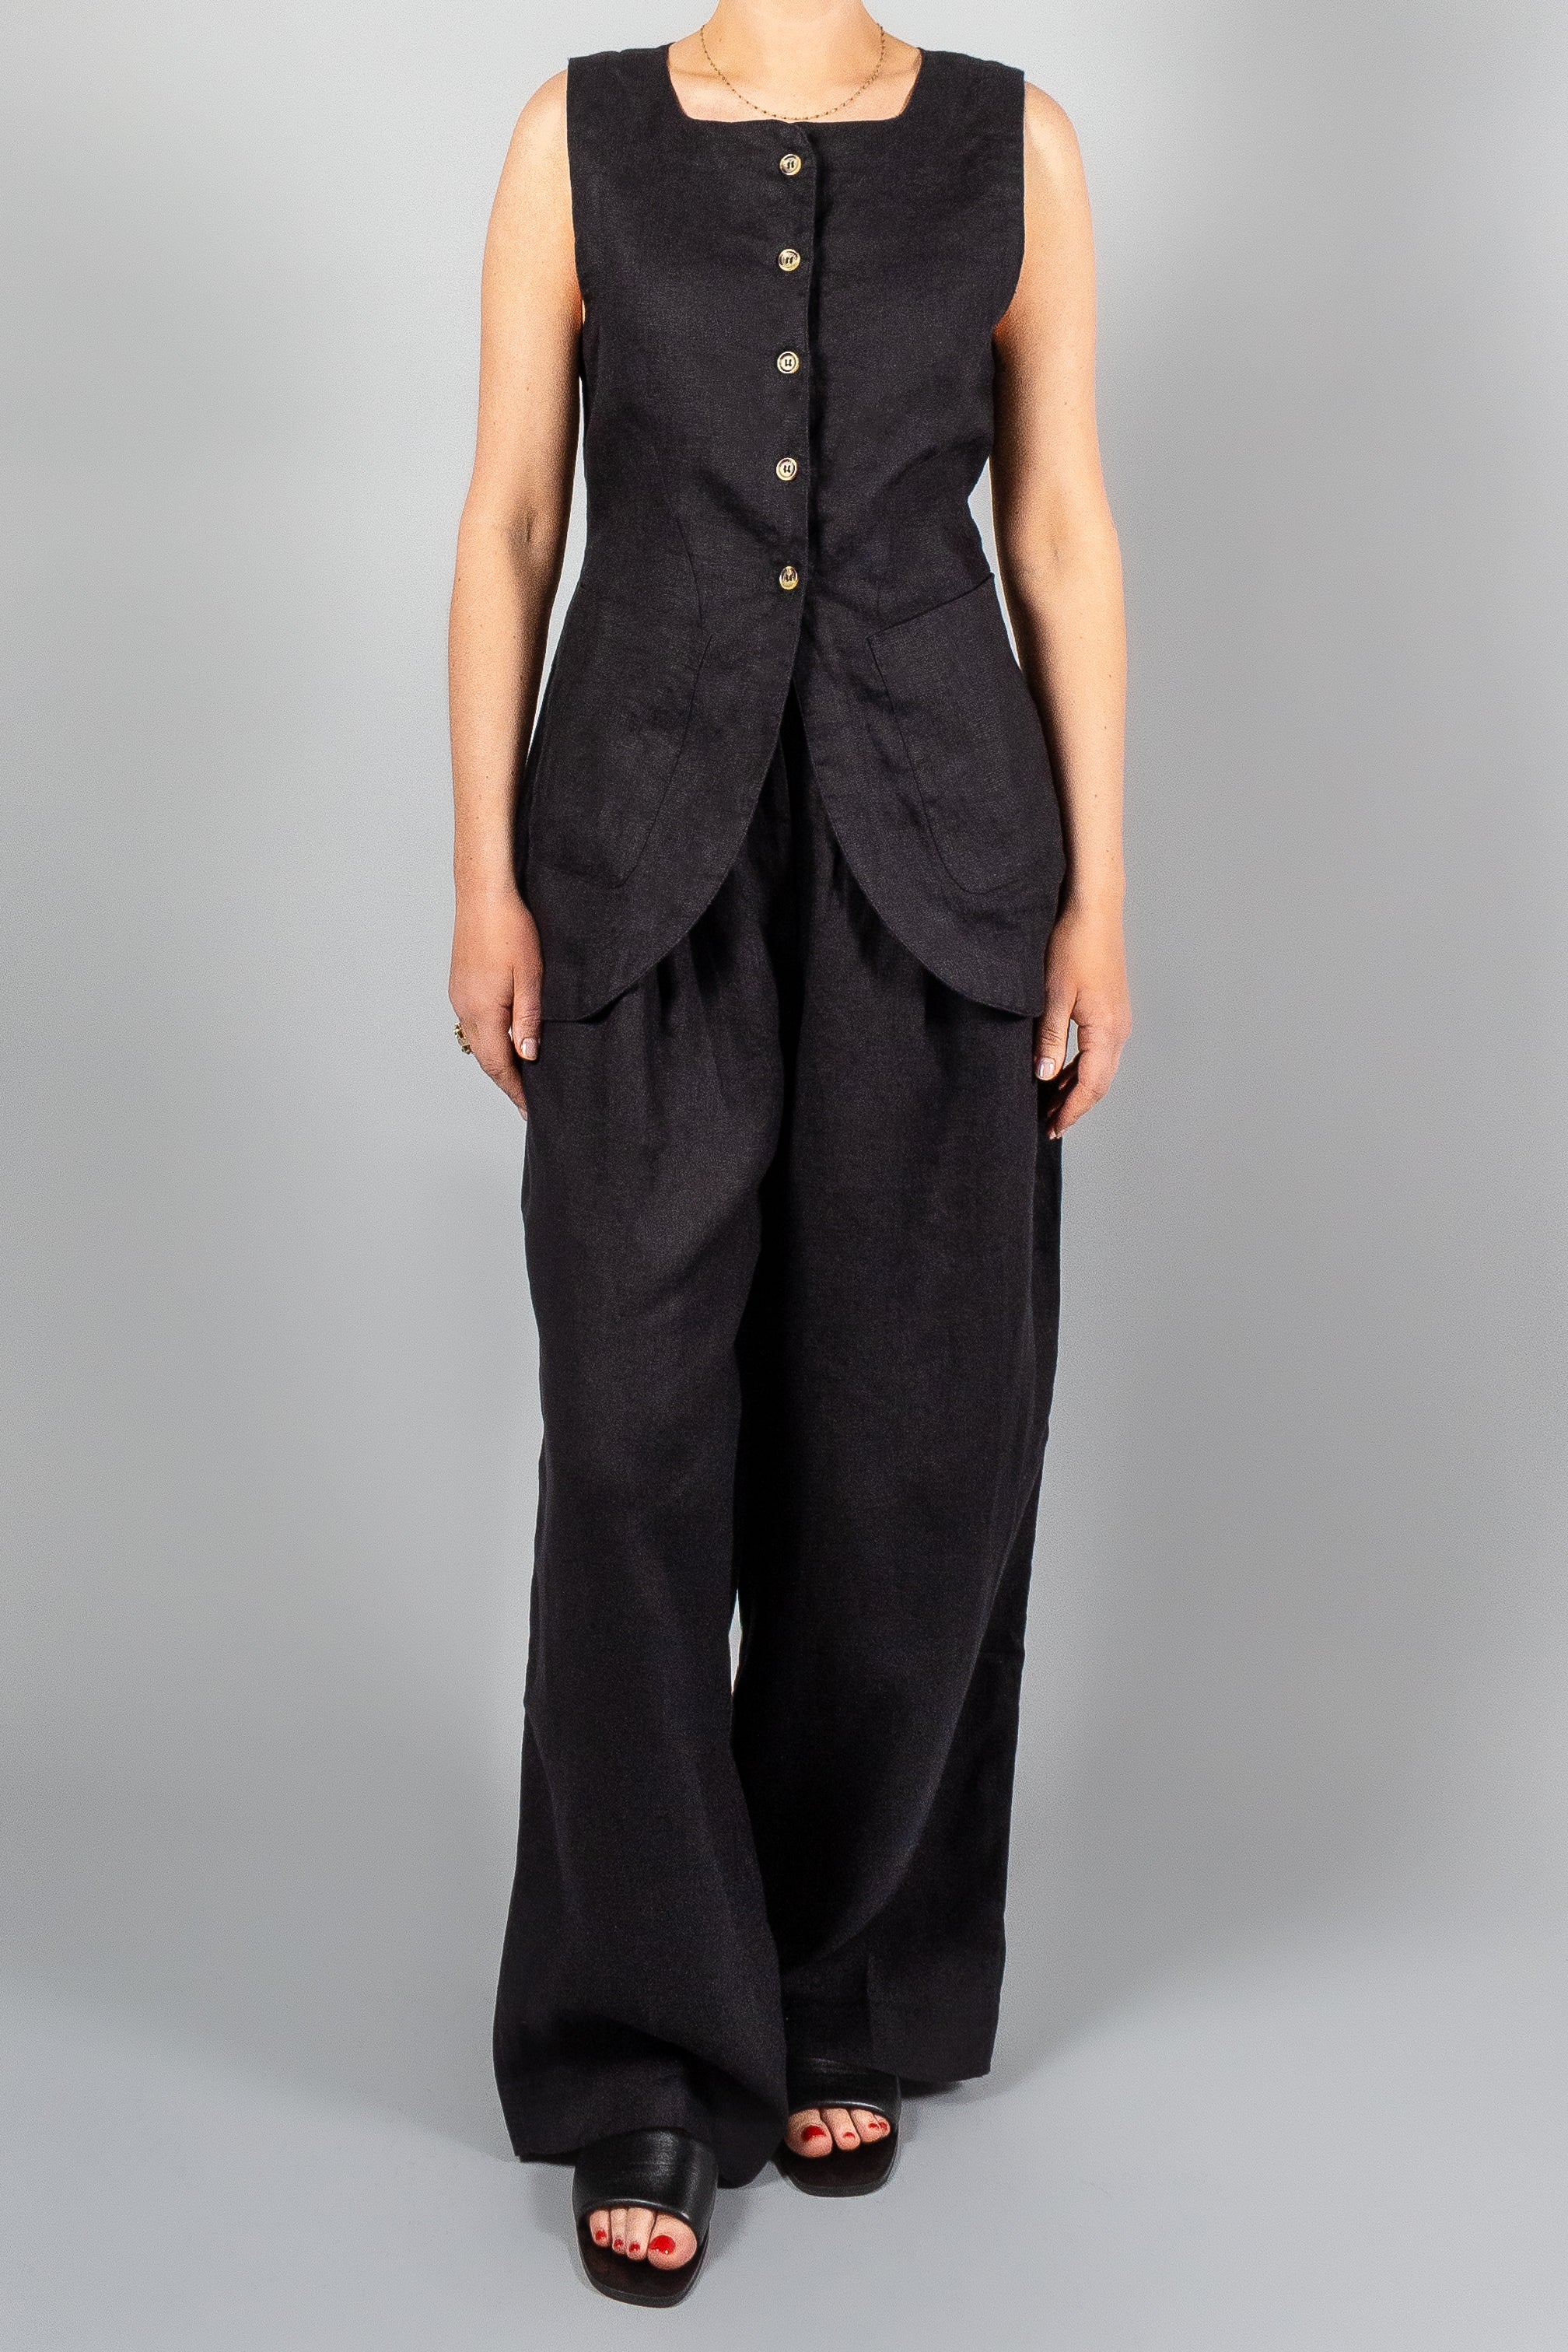 Posse Emma Vest-Jackets and Blazers-Misch-Boutique-Vancouver-Canada-misch.ca